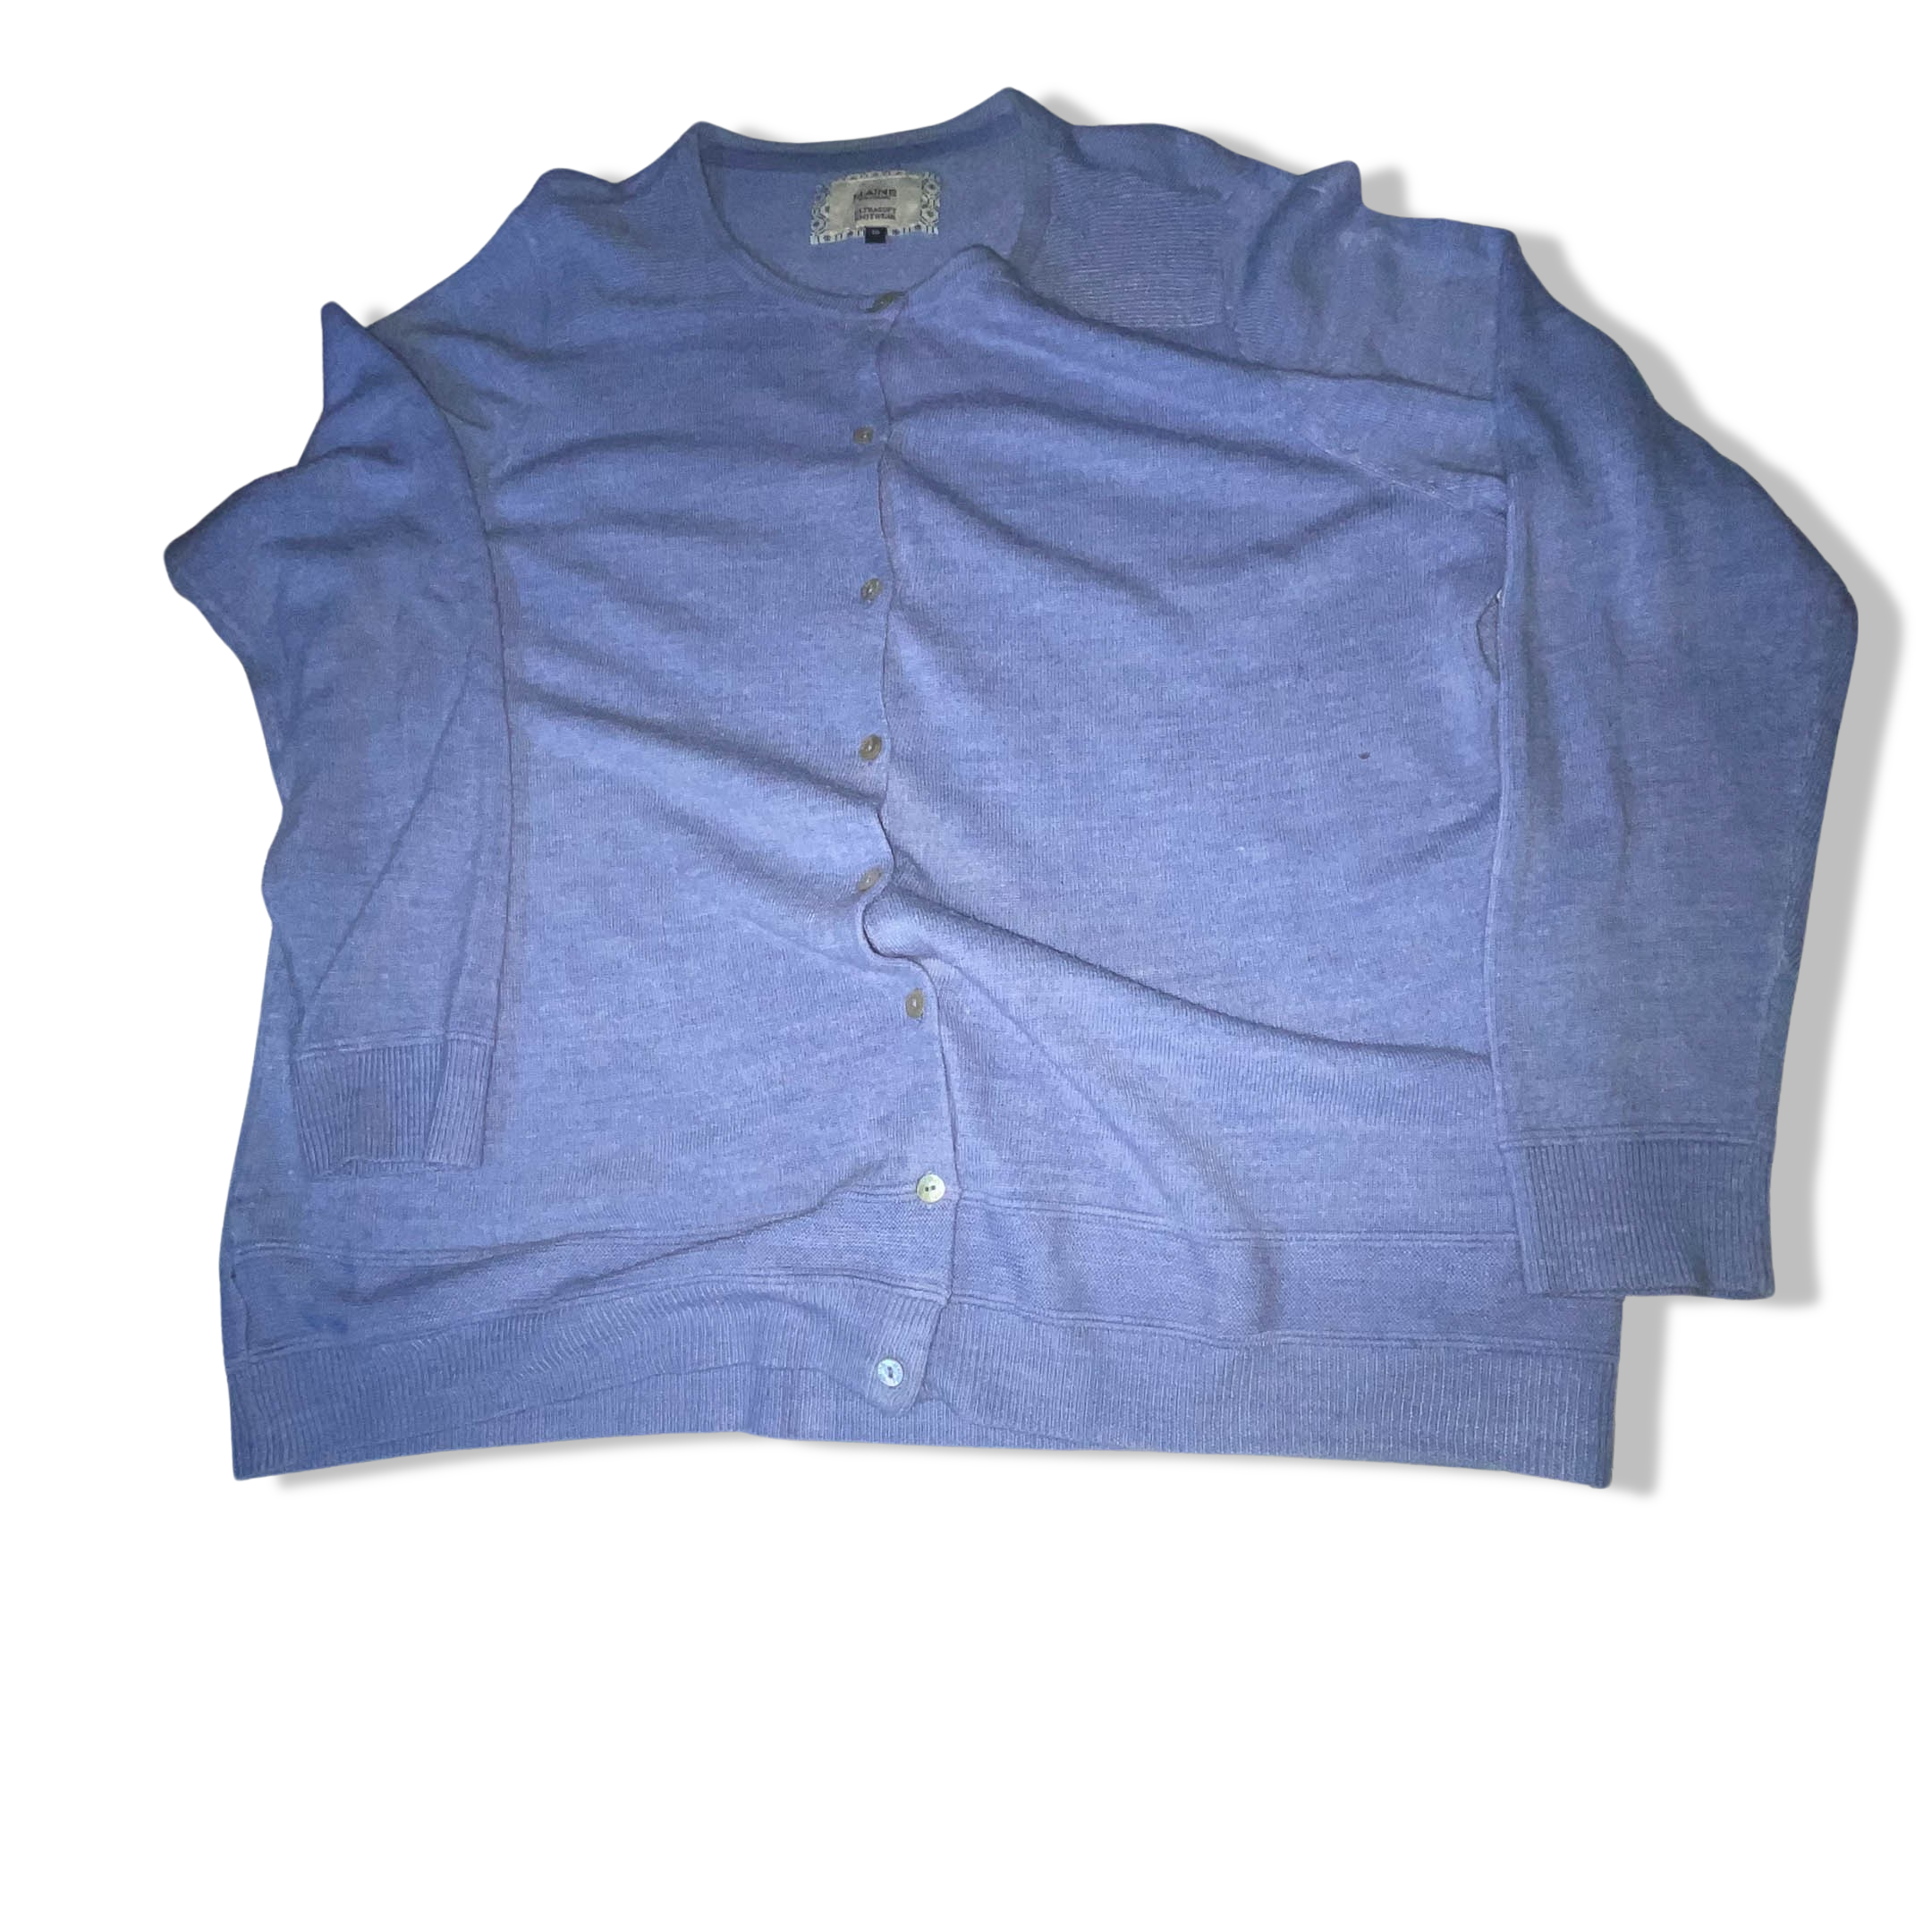 Vintage Maine Ultrasoft knitwear crewneck blue button up cardigan size 20